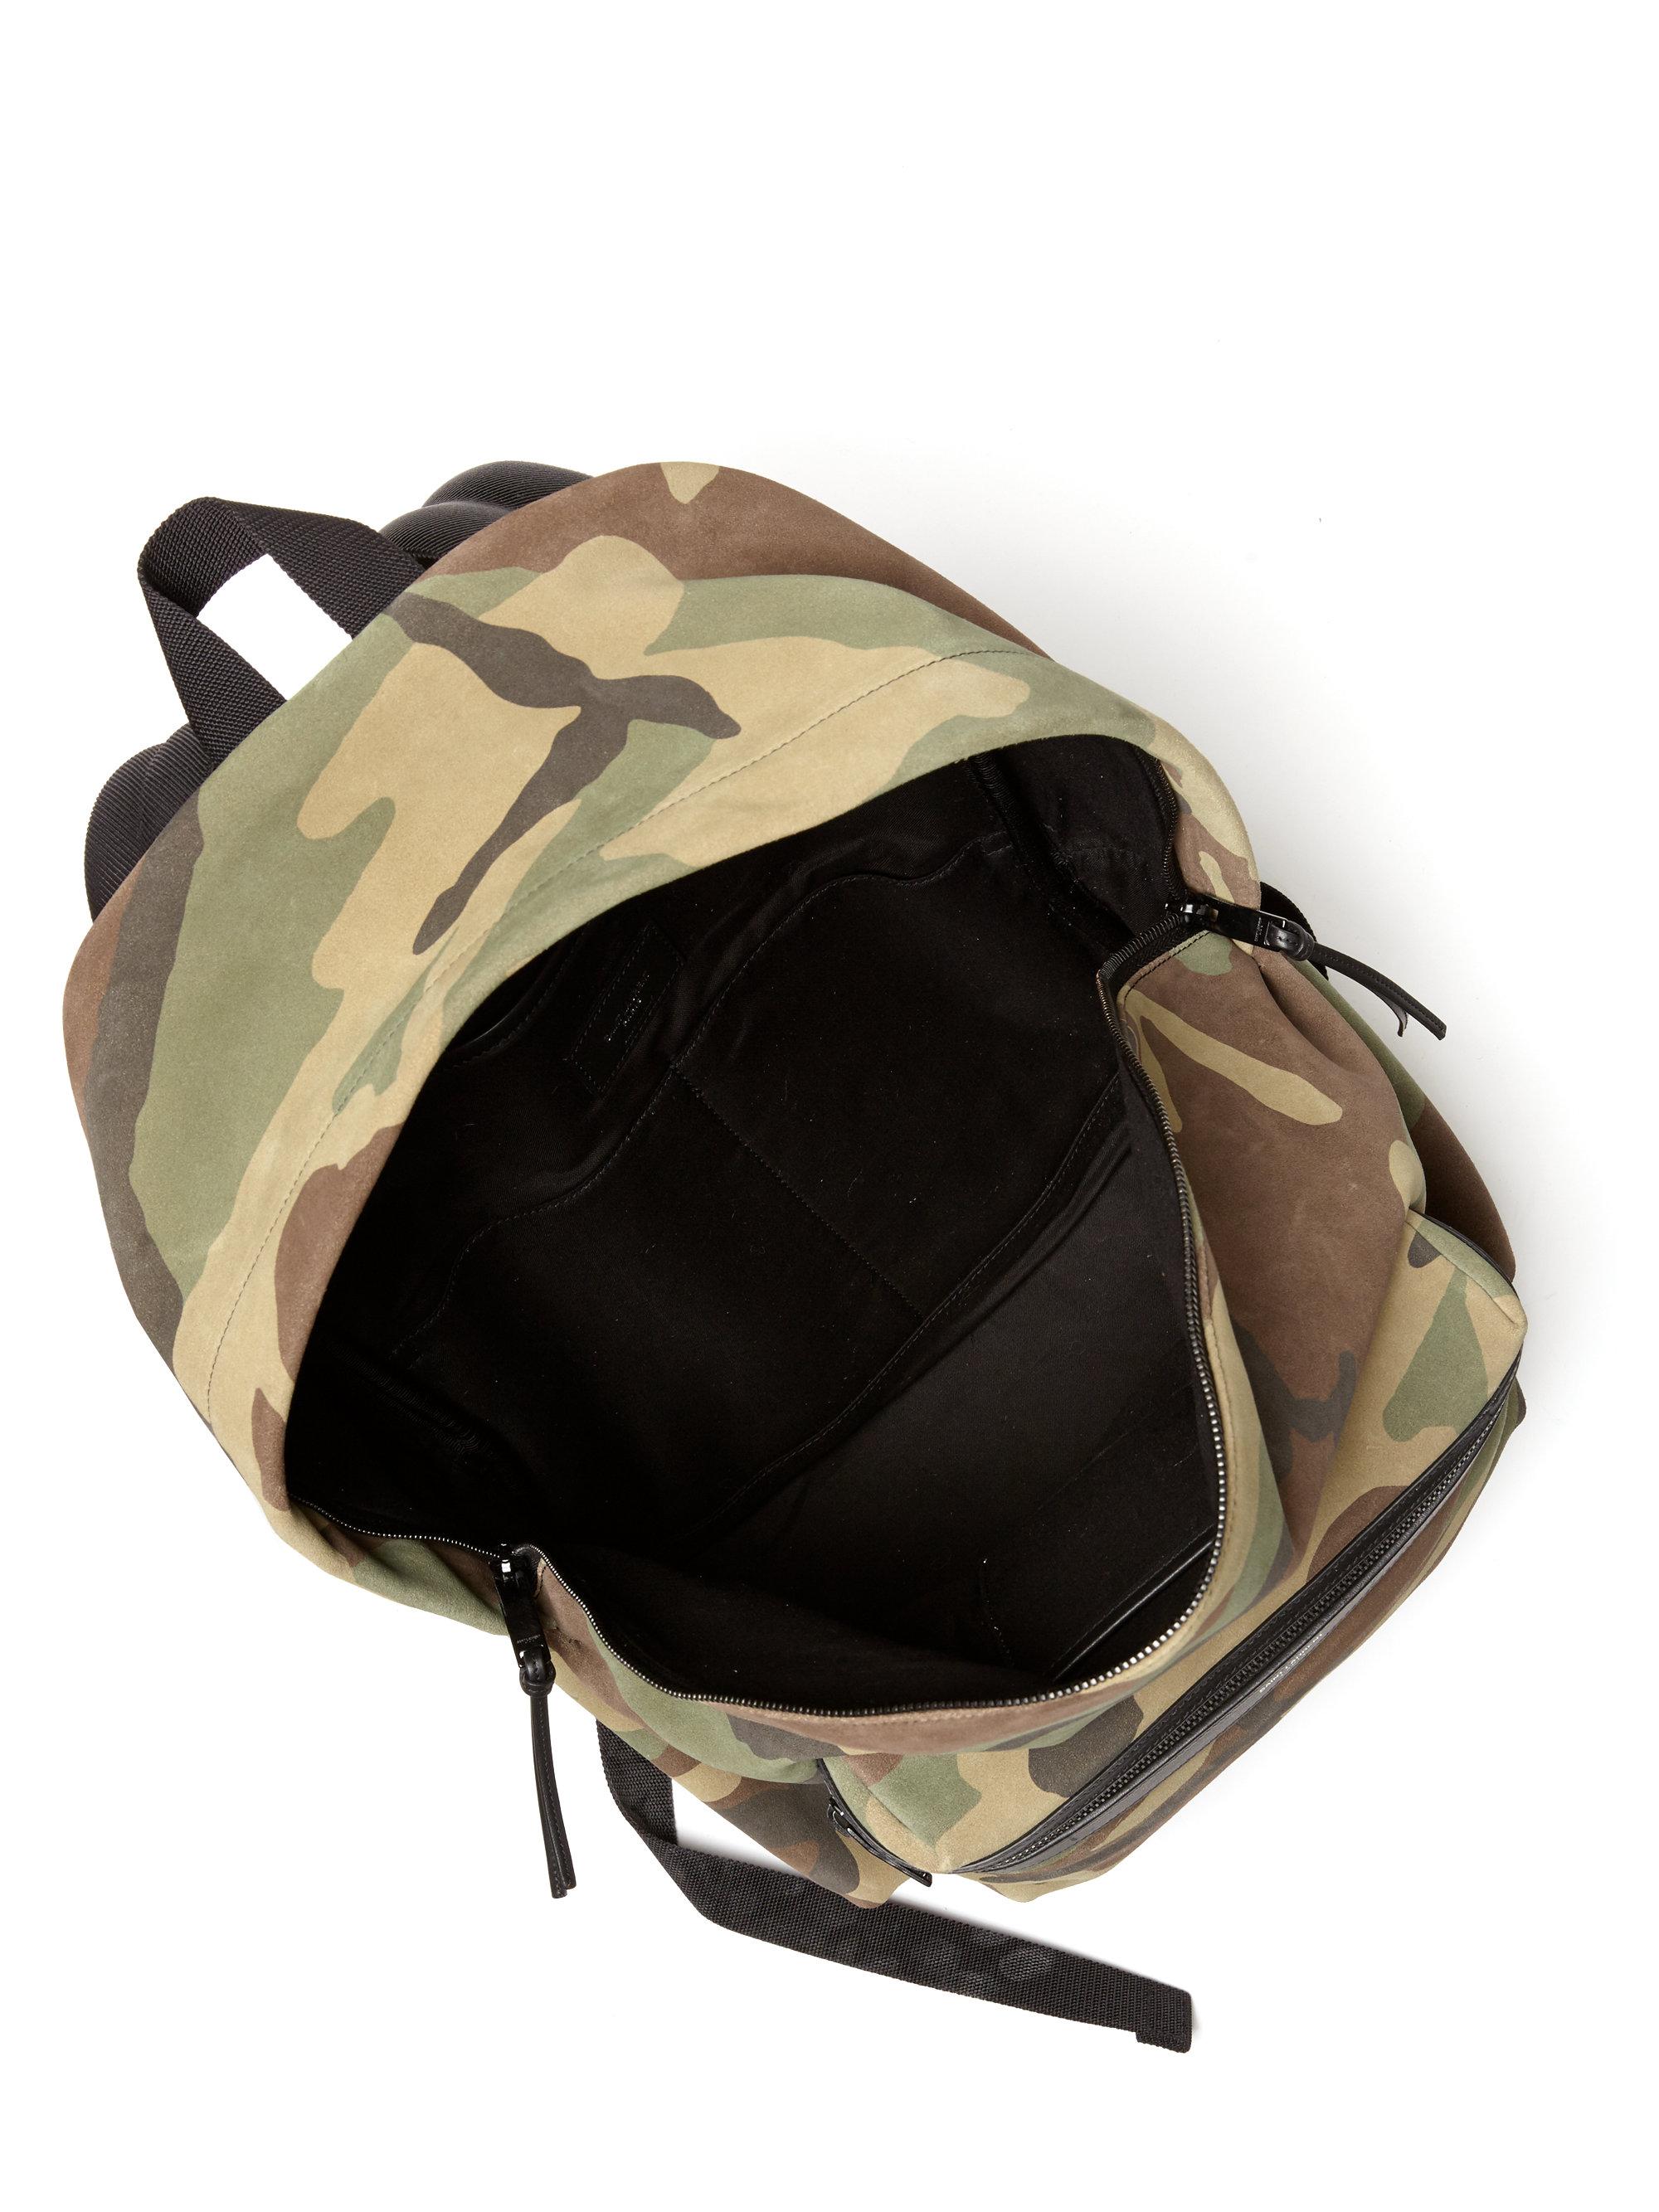 Saint Laurent Camouflage Hunting Backpack for Men - Lyst